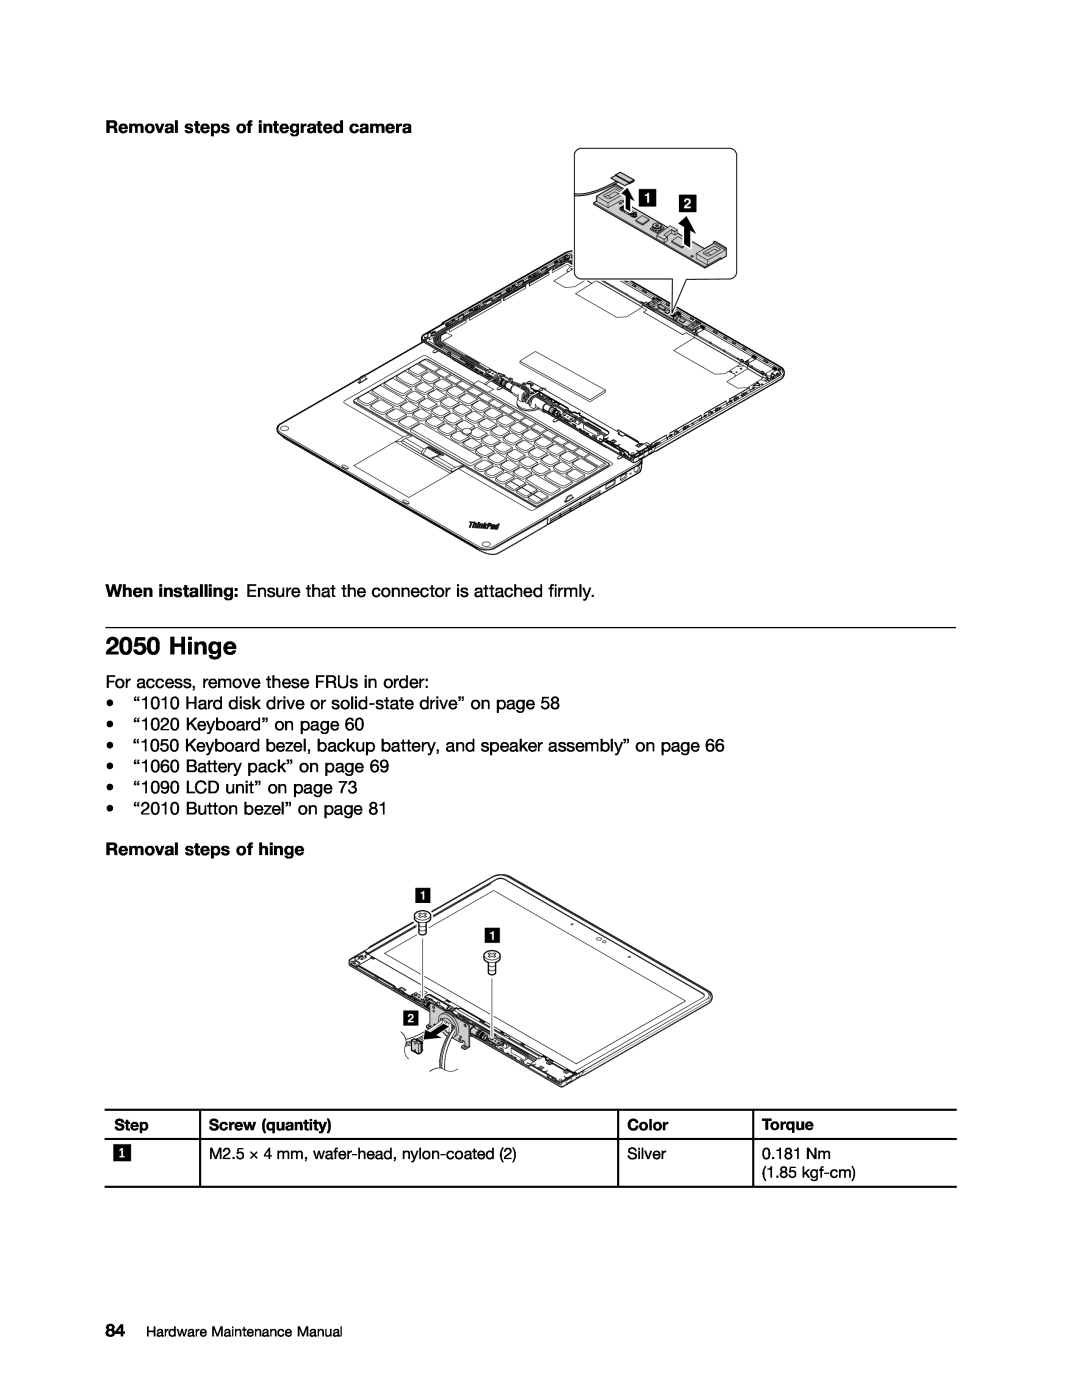 Lenovo S230U, 33472YU manual Hinge, Removal steps of integrated camera, Removal steps of hinge 